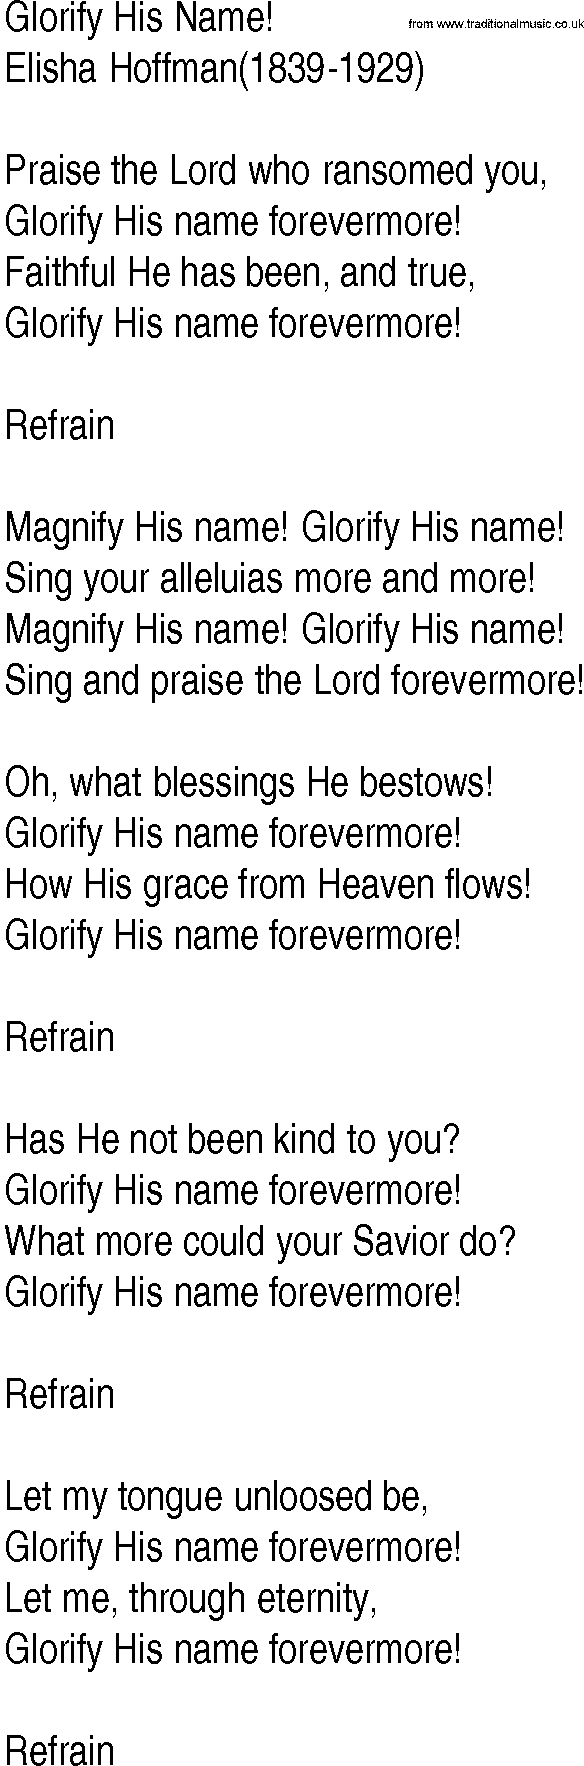 Hymn and Gospel Song: Glorify His Name! by Elisha Hoffman lyrics